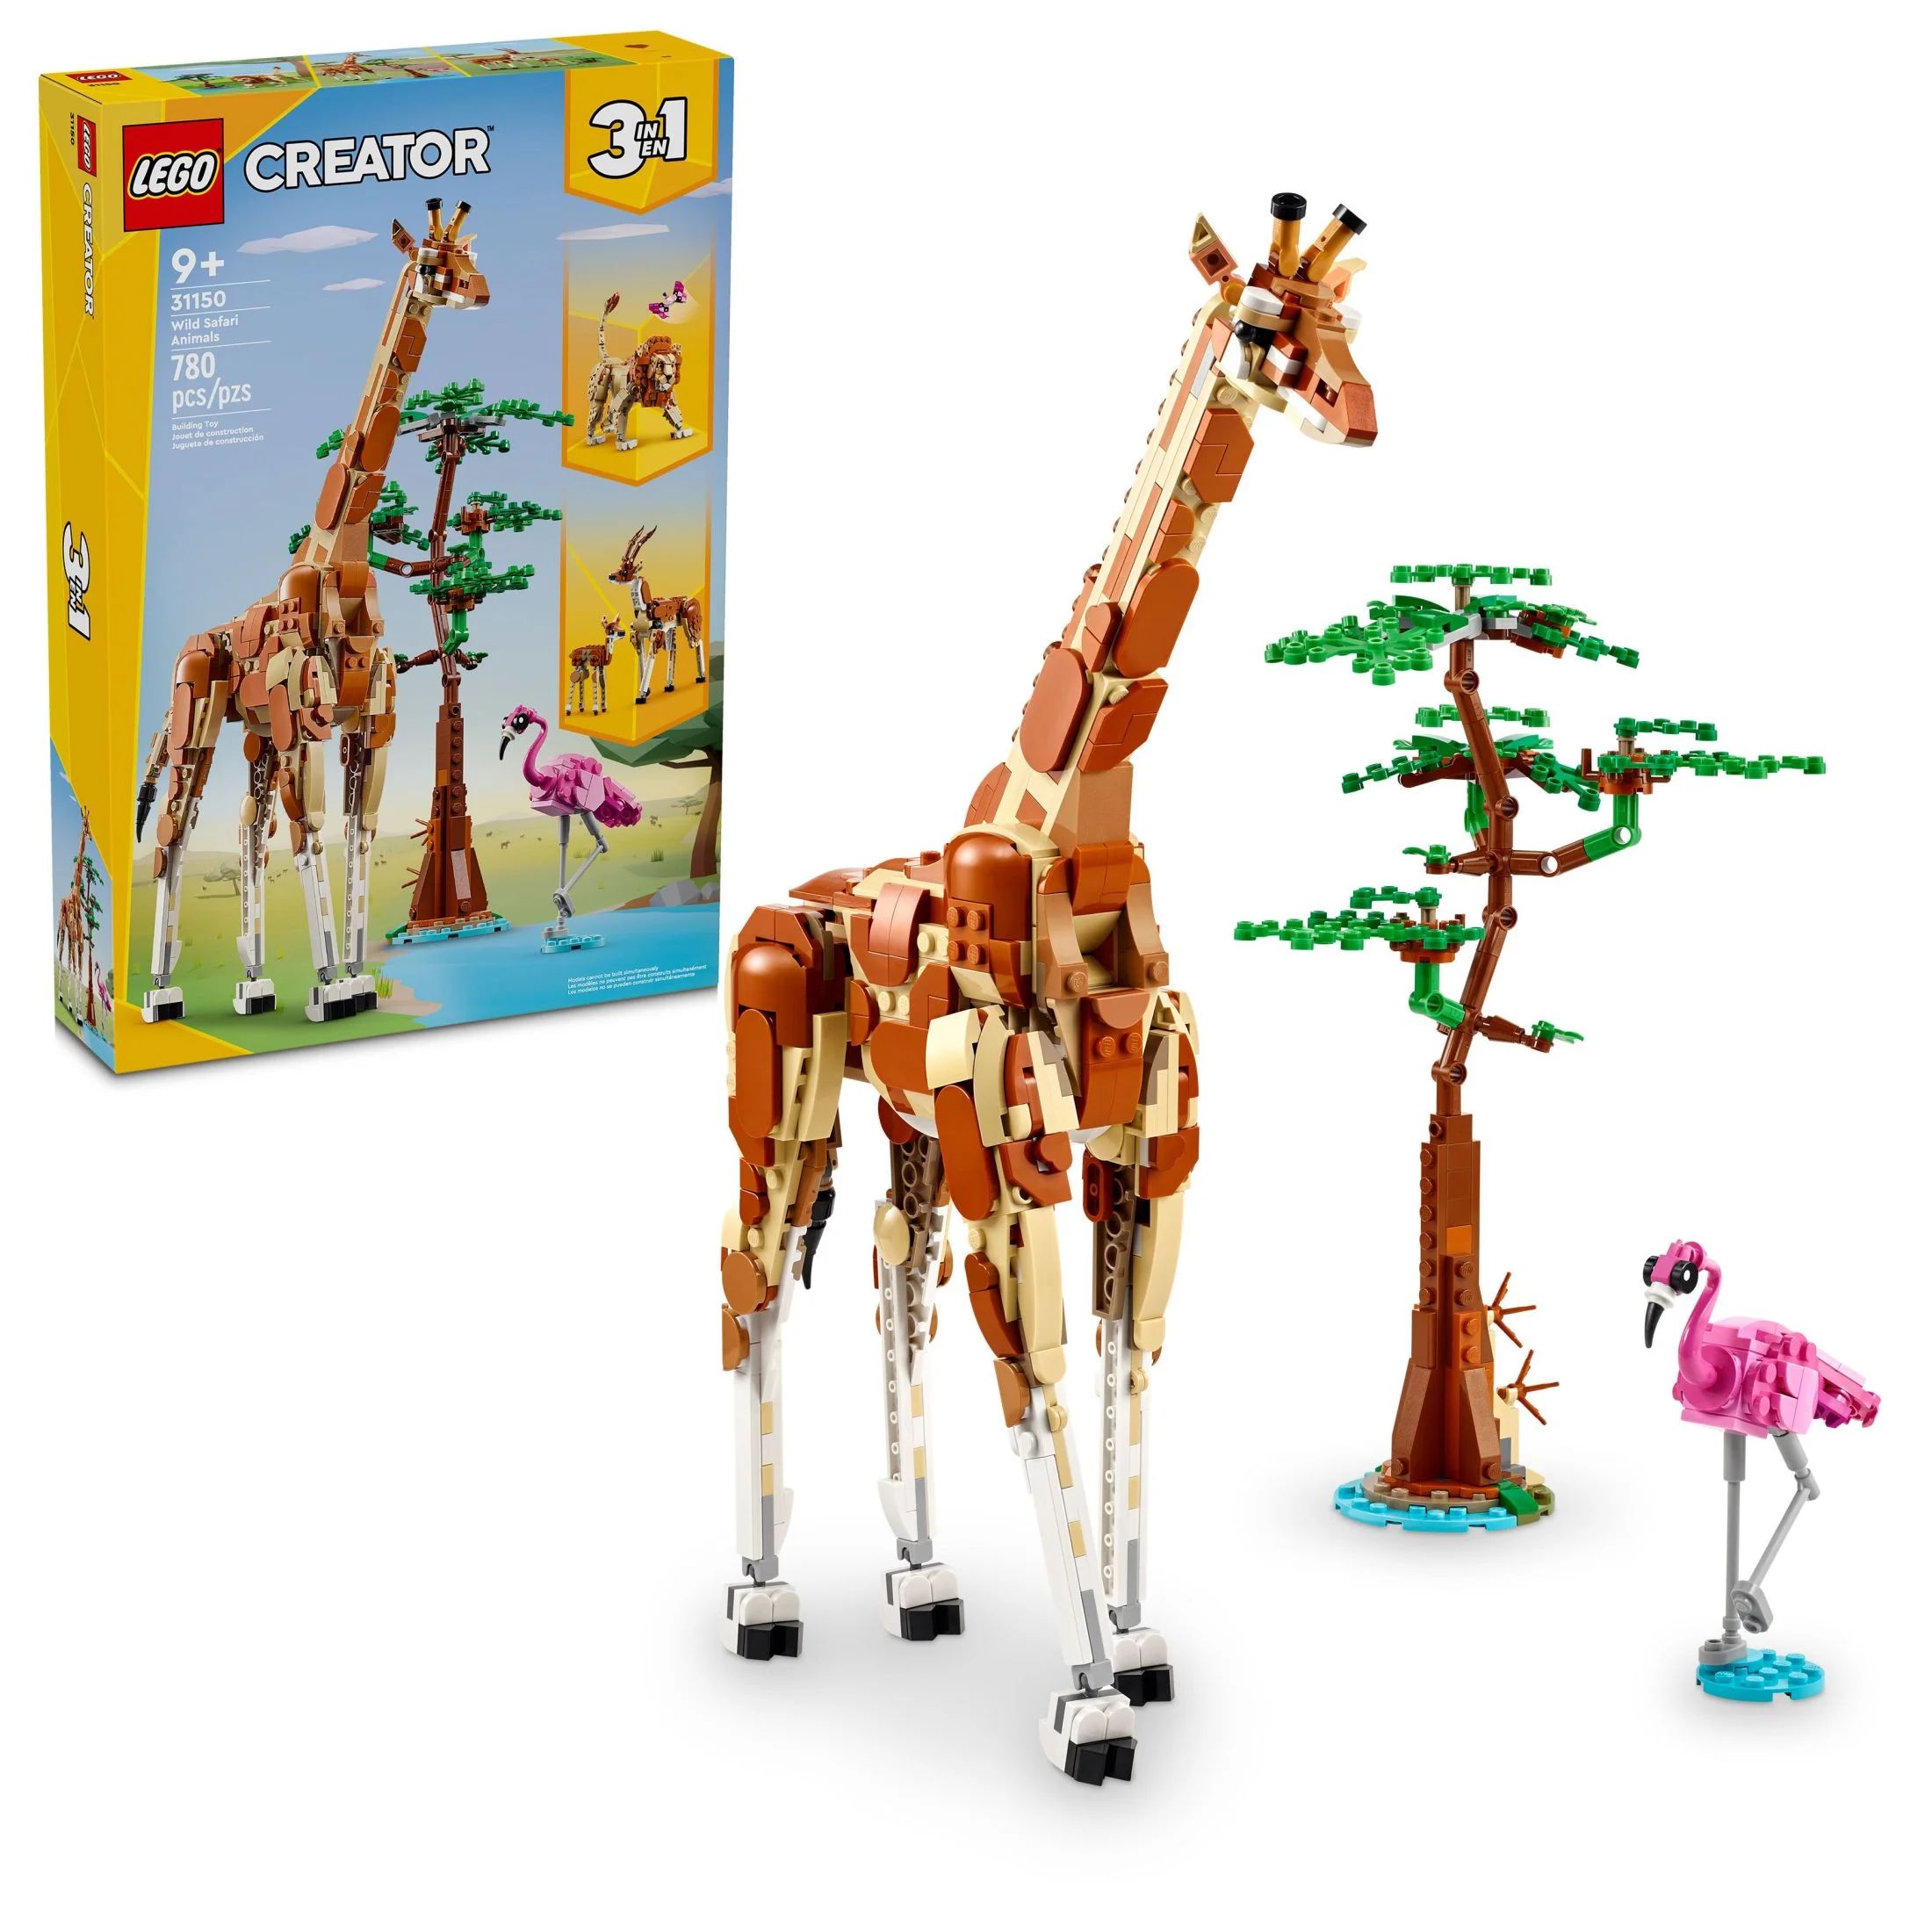 LEGO Creator 3 in 1 Wild Safari Animals, Rebuilds into 3 Different Safari Animal Figures - Giraff... | Walmart (US)